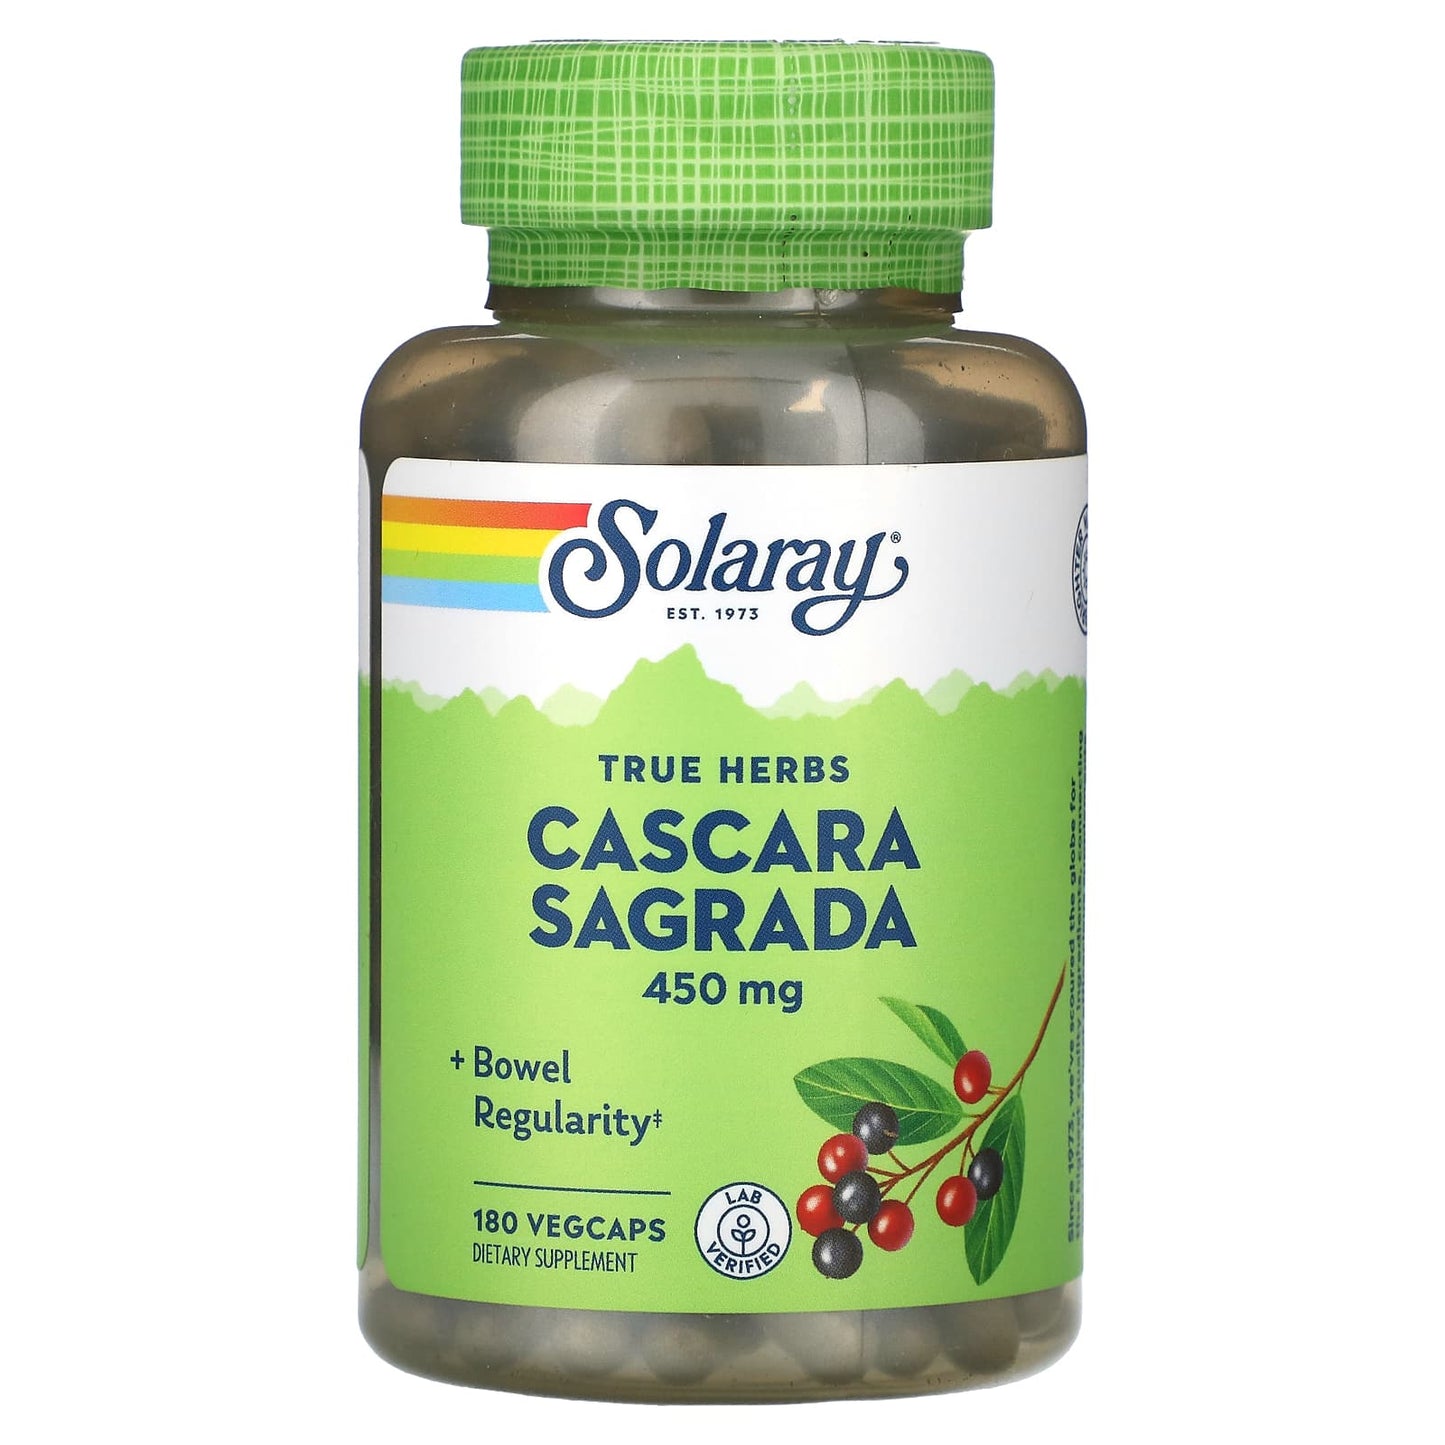 Solaray-Cascara Sagrada-True Herbs-450 mg-180 VegCaps